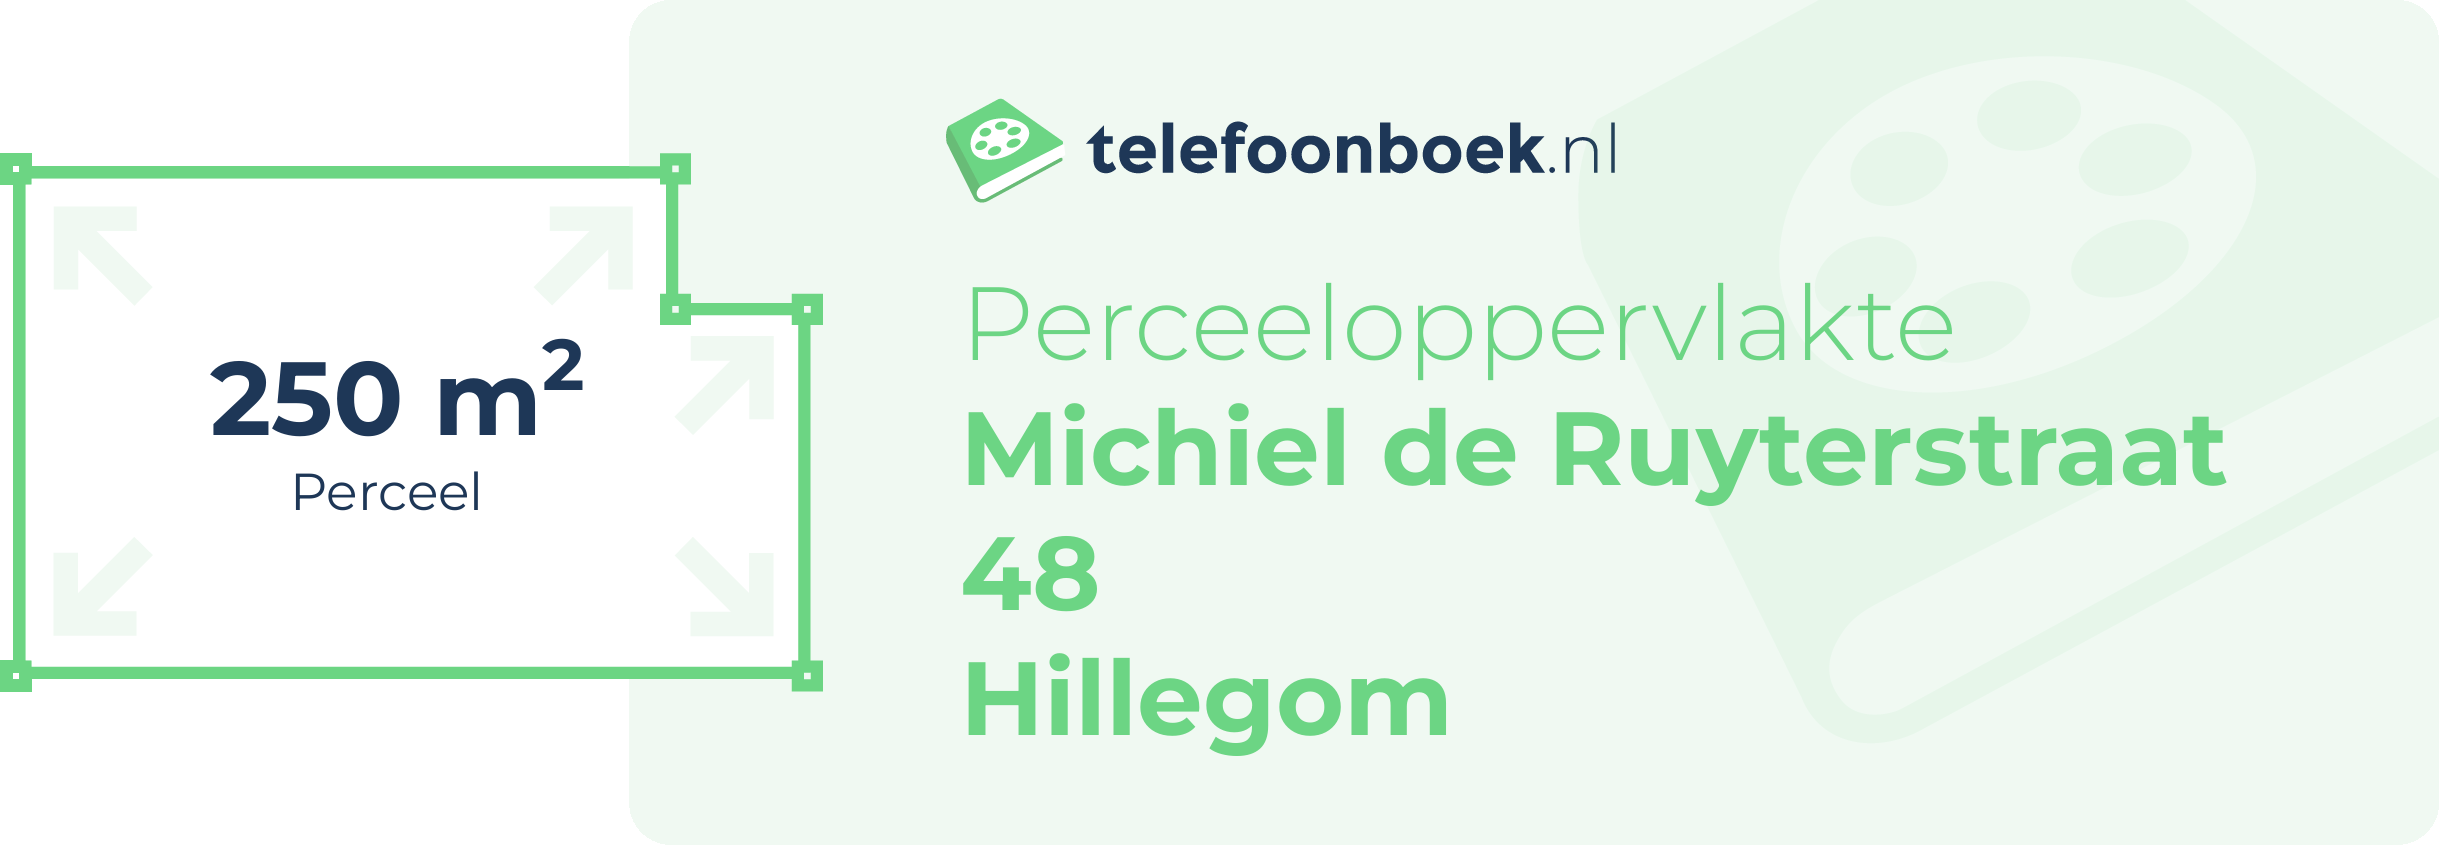 Perceeloppervlakte Michiel De Ruyterstraat 48 Hillegom